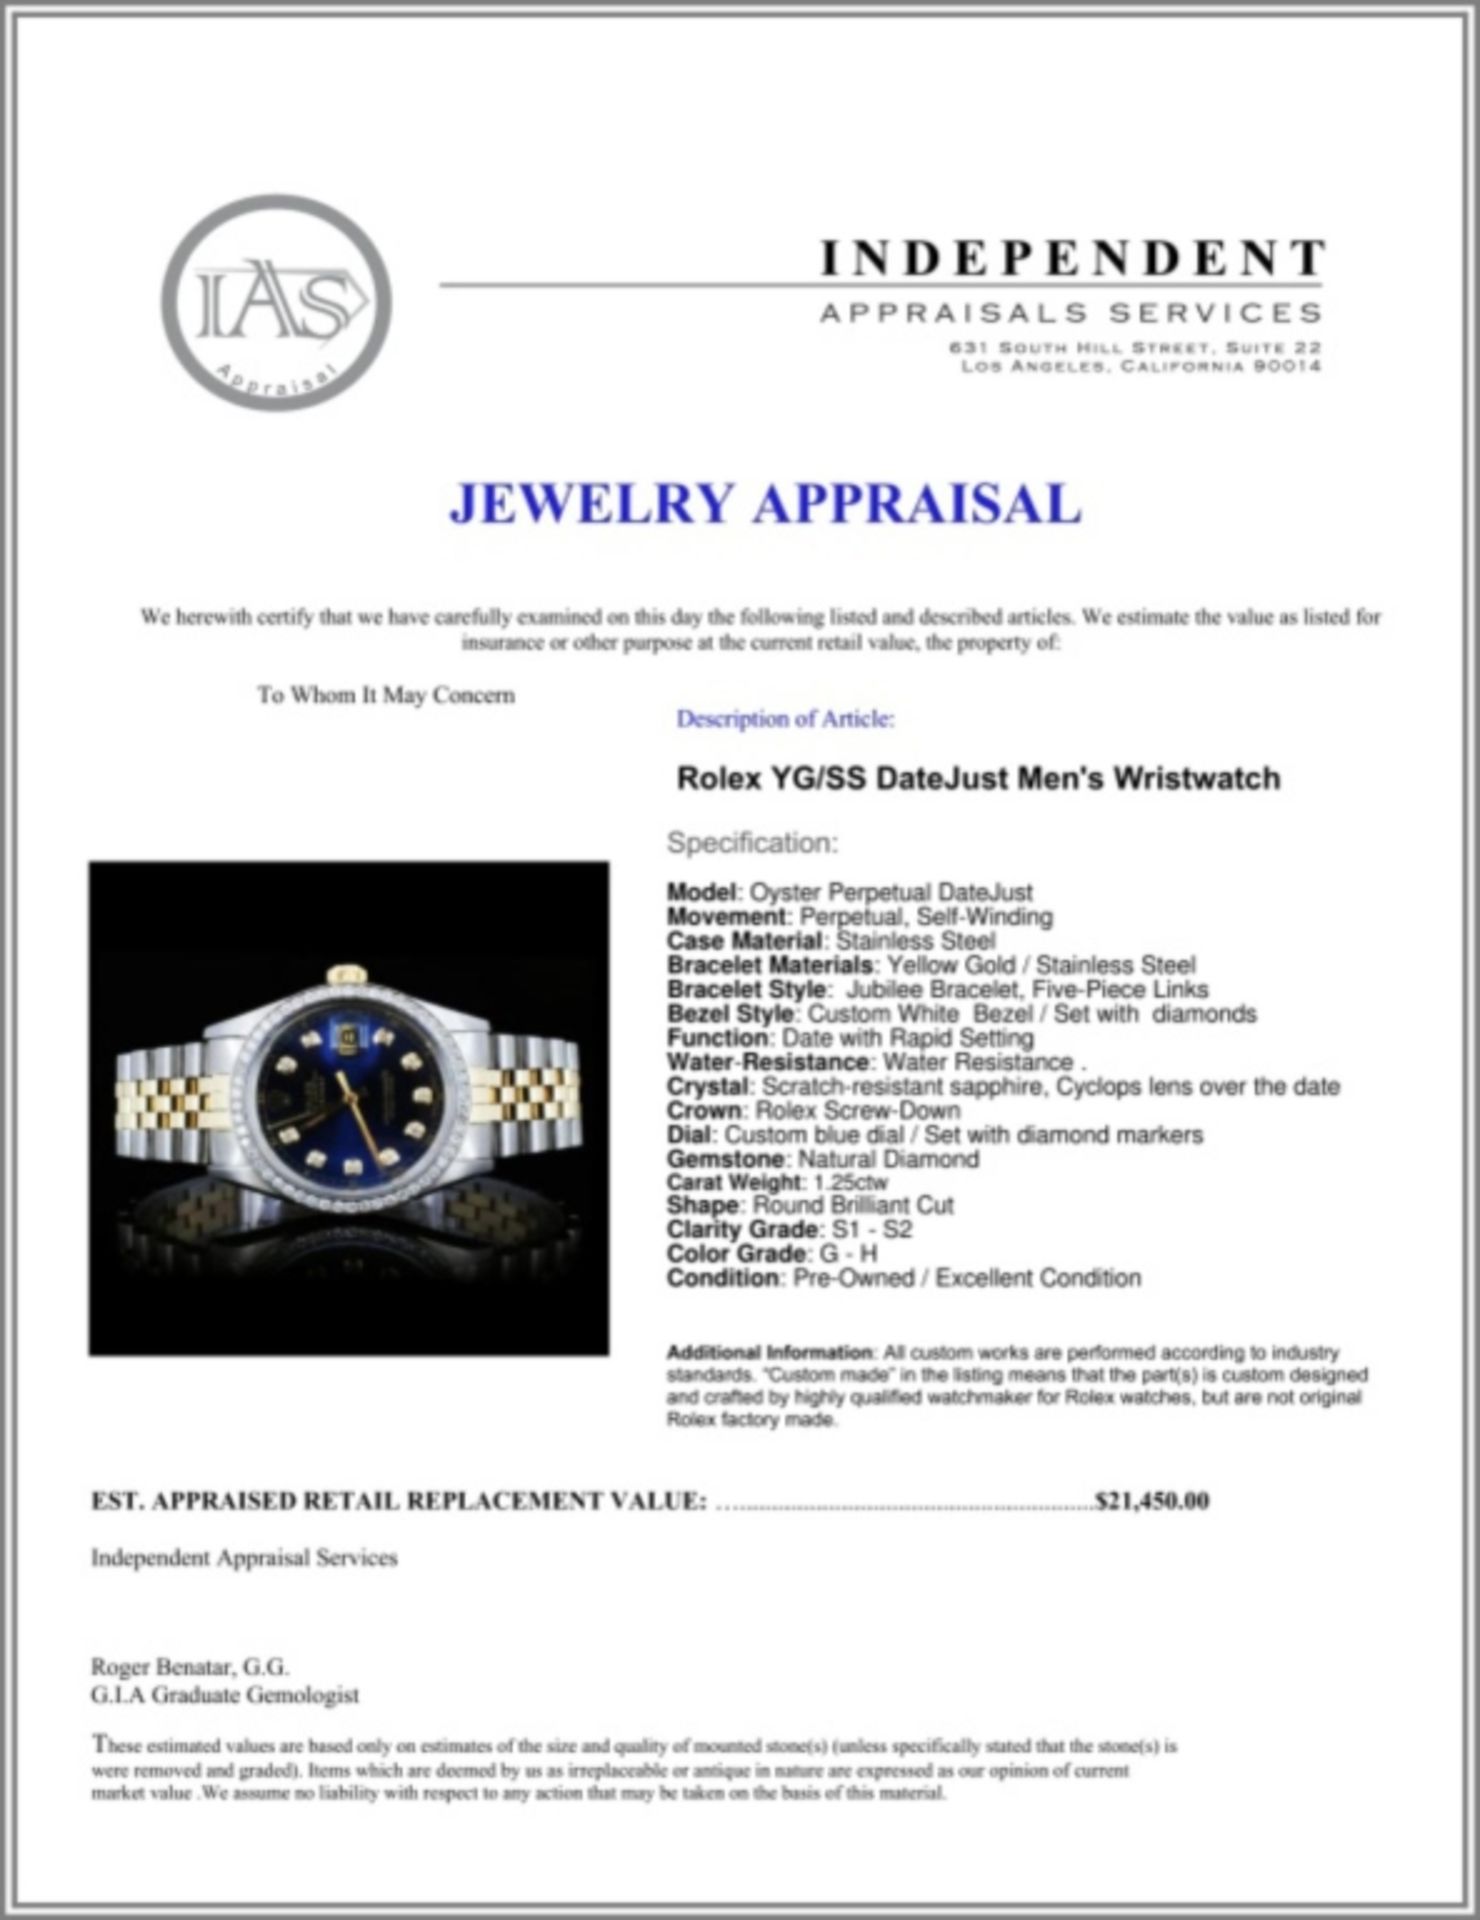 Rolex YG/SS DateJust Diamond 36mm Watch - Image 5 of 5